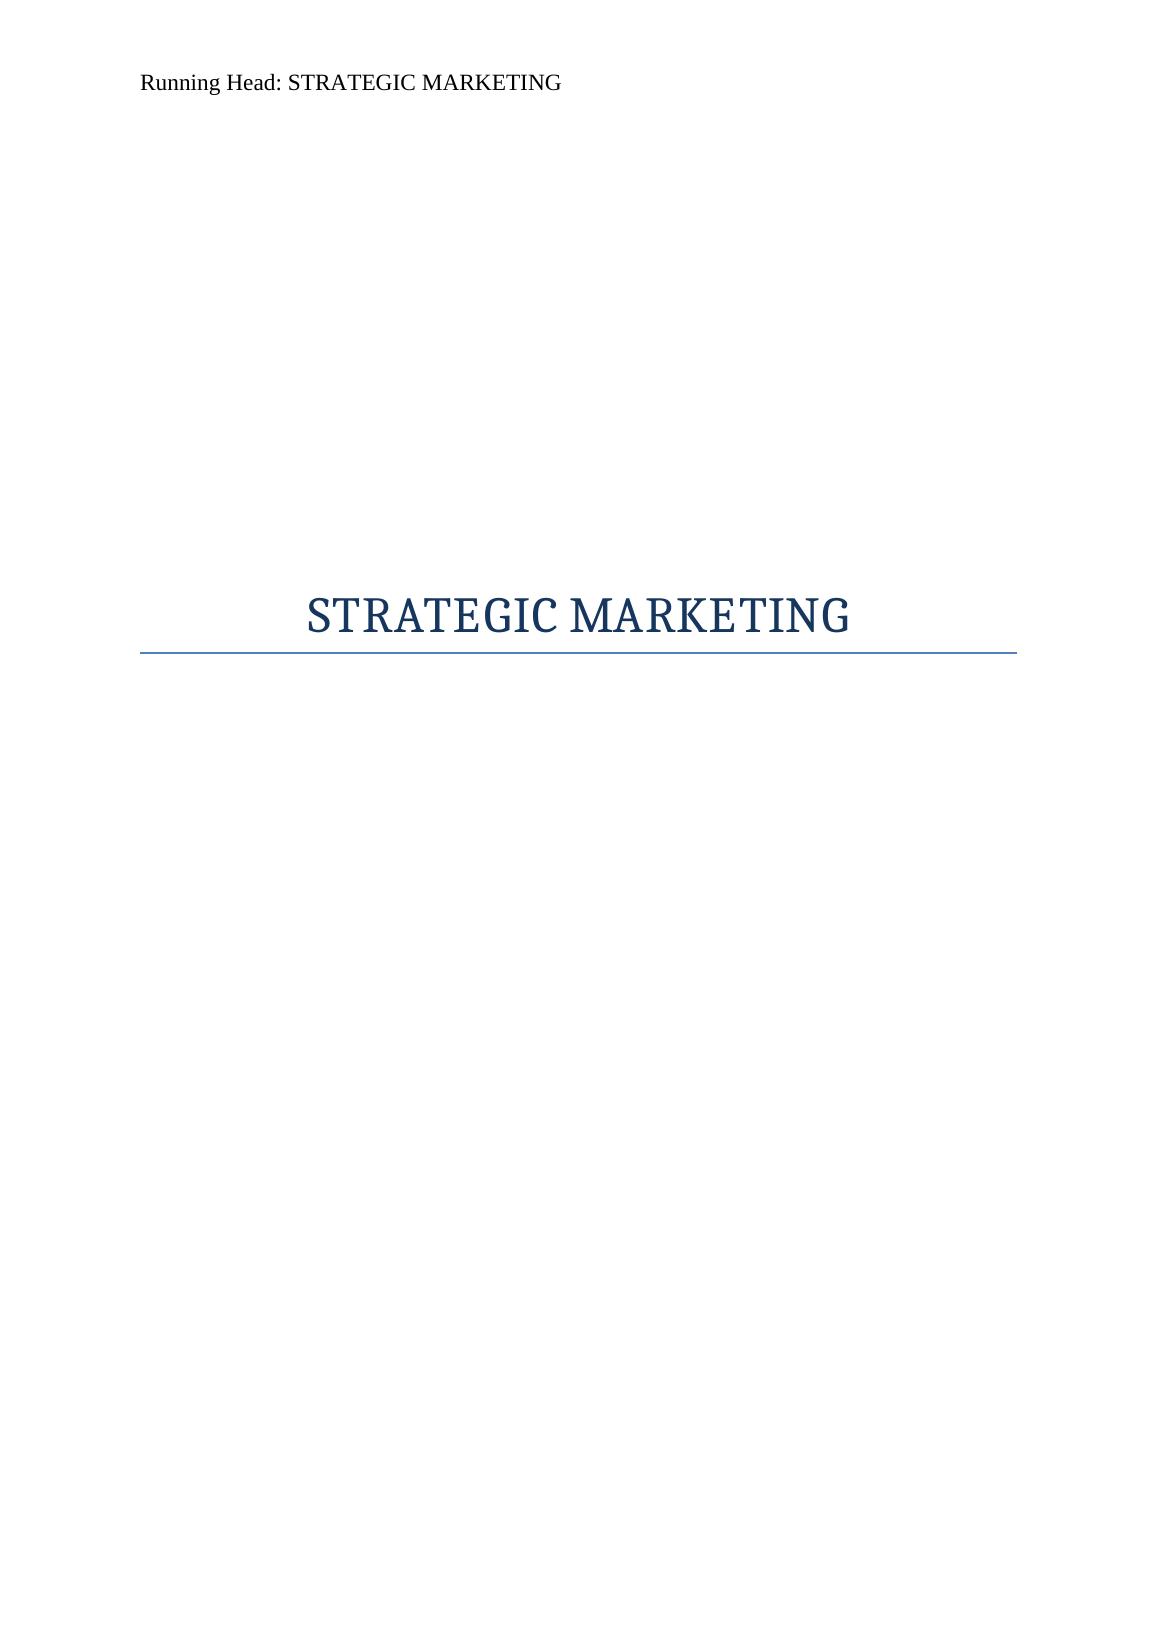 Strategic Marketing Plan | Whole Foods Market Inc Assignment_1